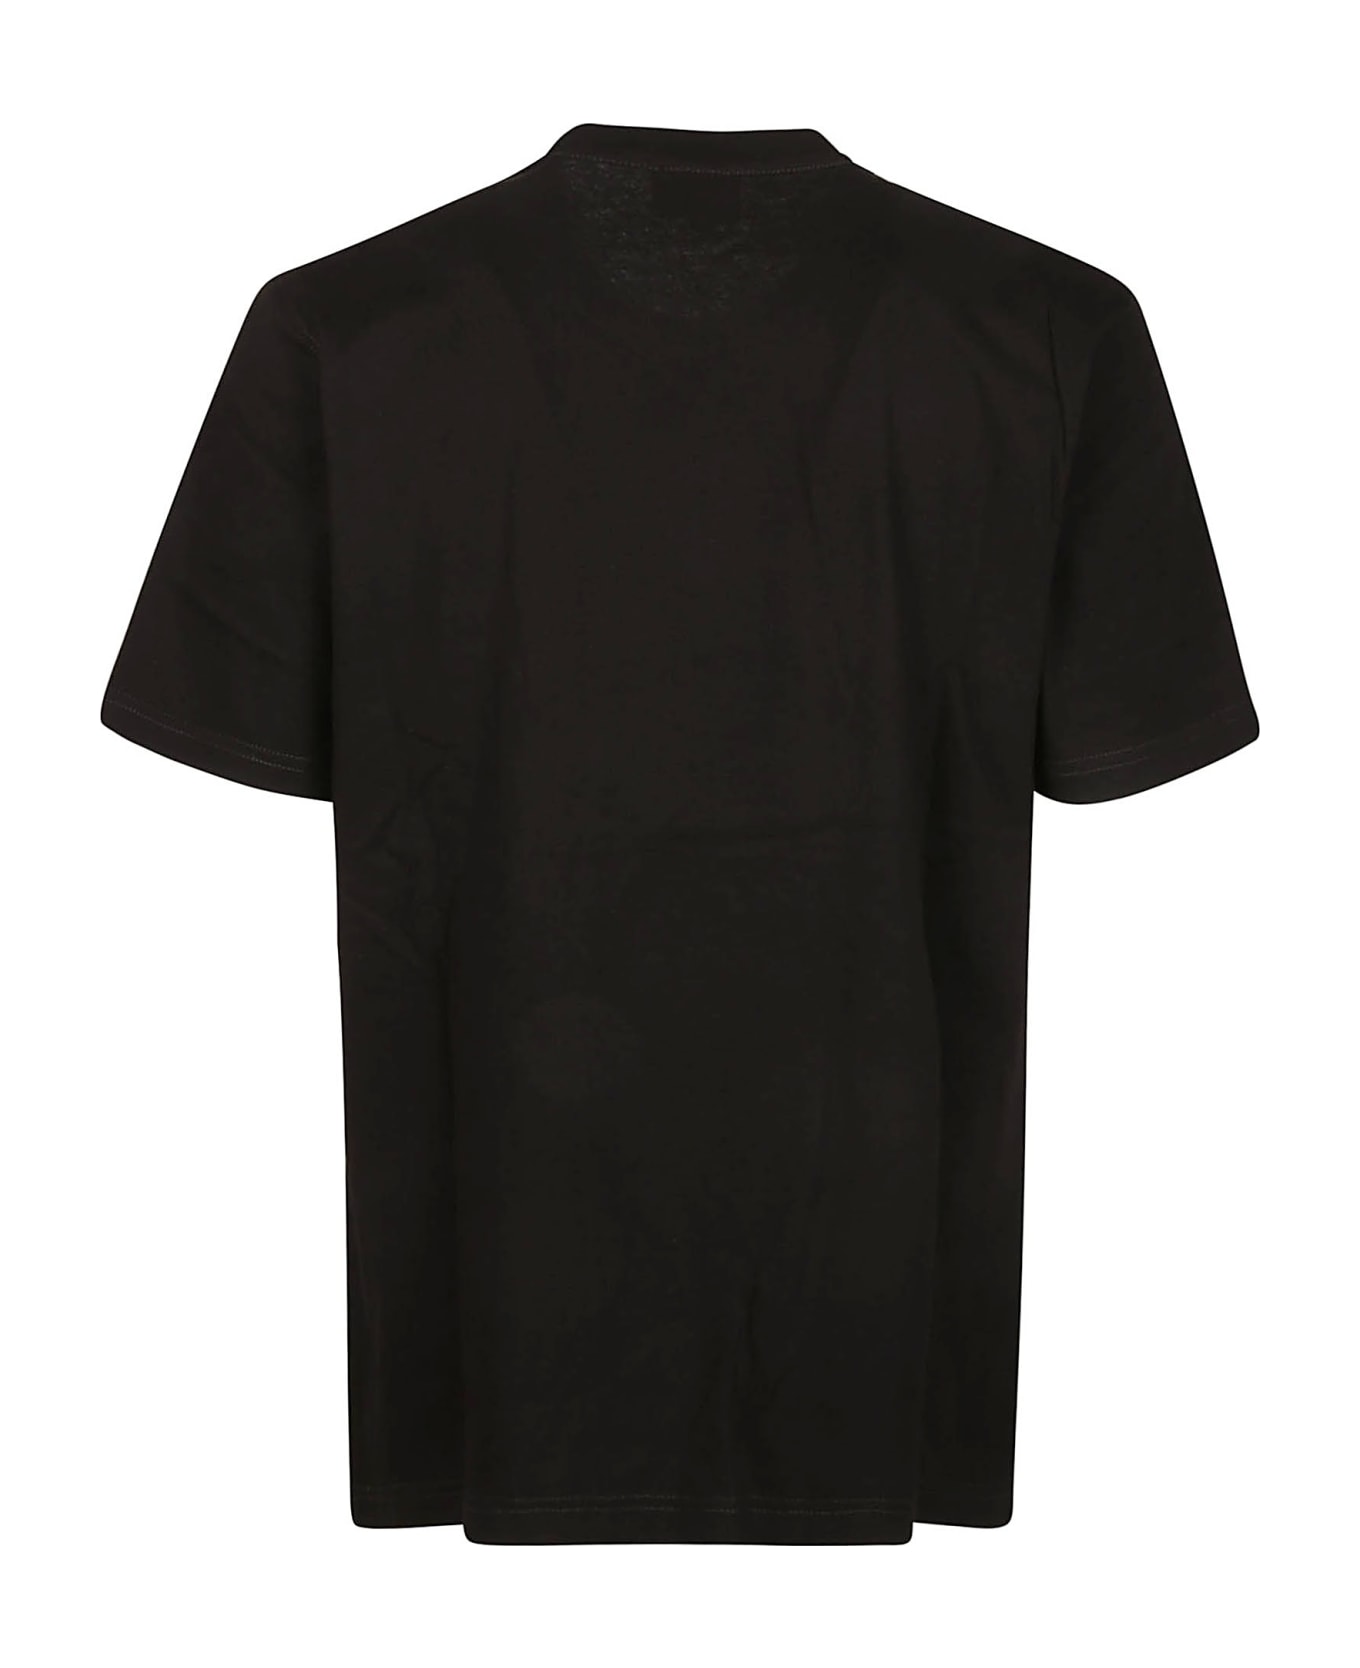 Diesel T-just N11 T-shirt - Xx Black